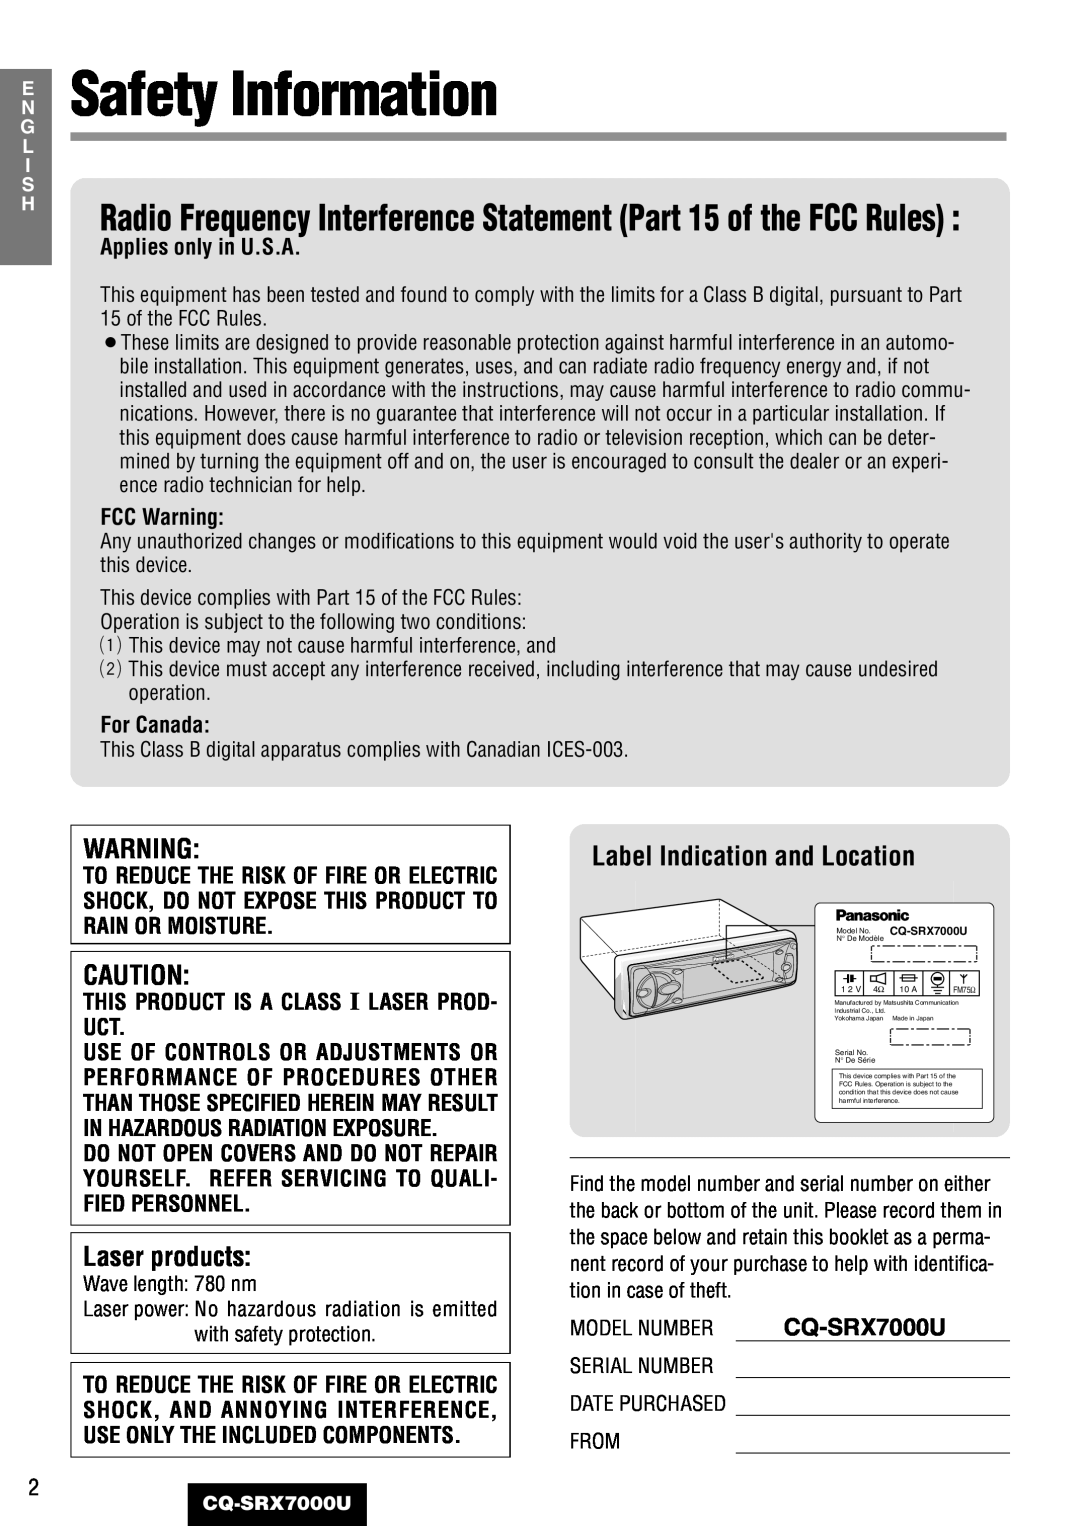 Panasonic CQ-SRX7000U manual E Safety Information, Laser products, Label Indication and Location 